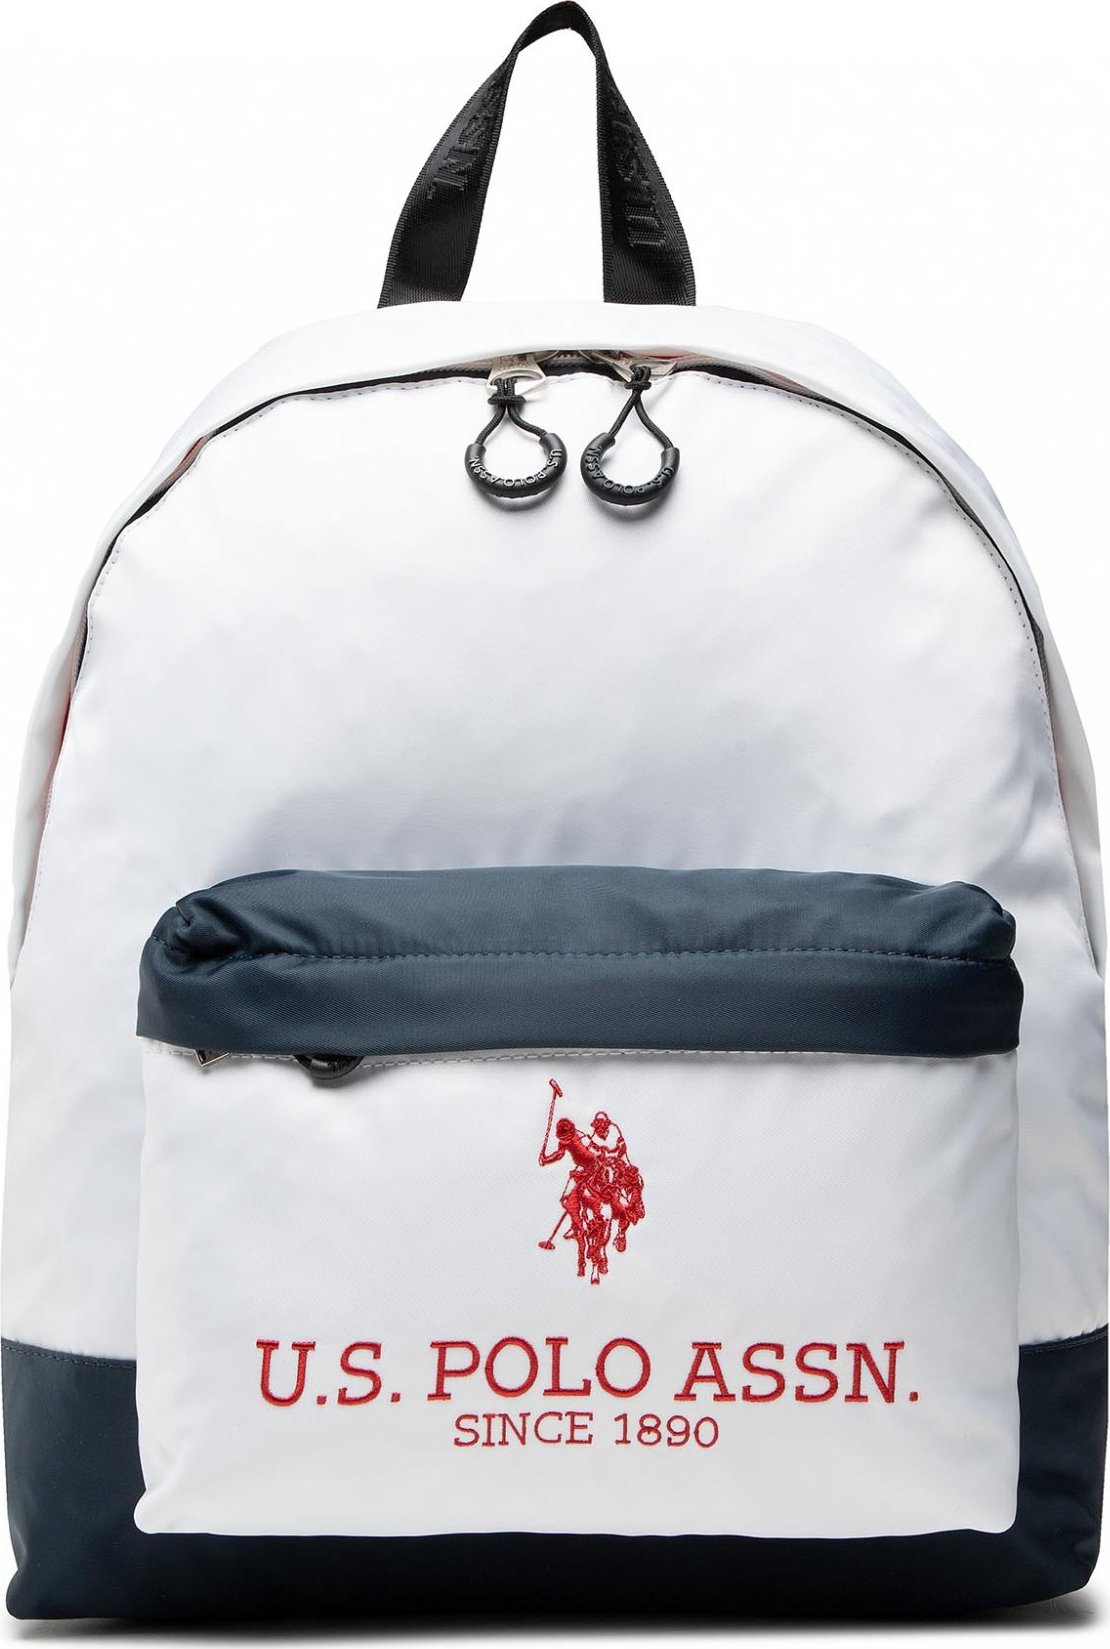 U.S. Polo Assn. New Bump Backpack Bag BIUNB4855MIA207